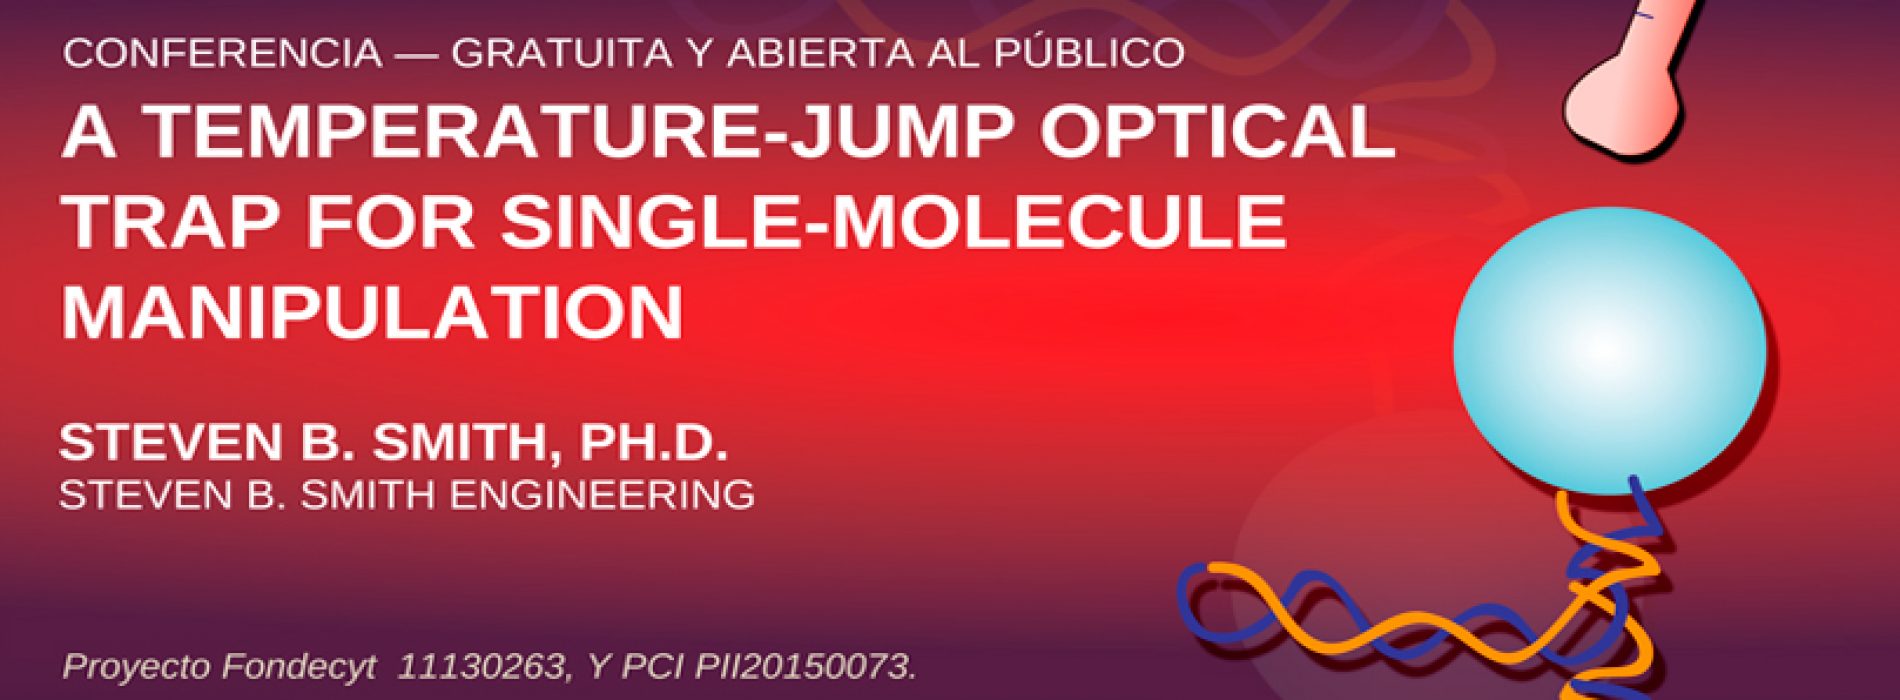 Conferencia “A Temperature-Jum Optical Trap For Single-Molecule Manipulation”